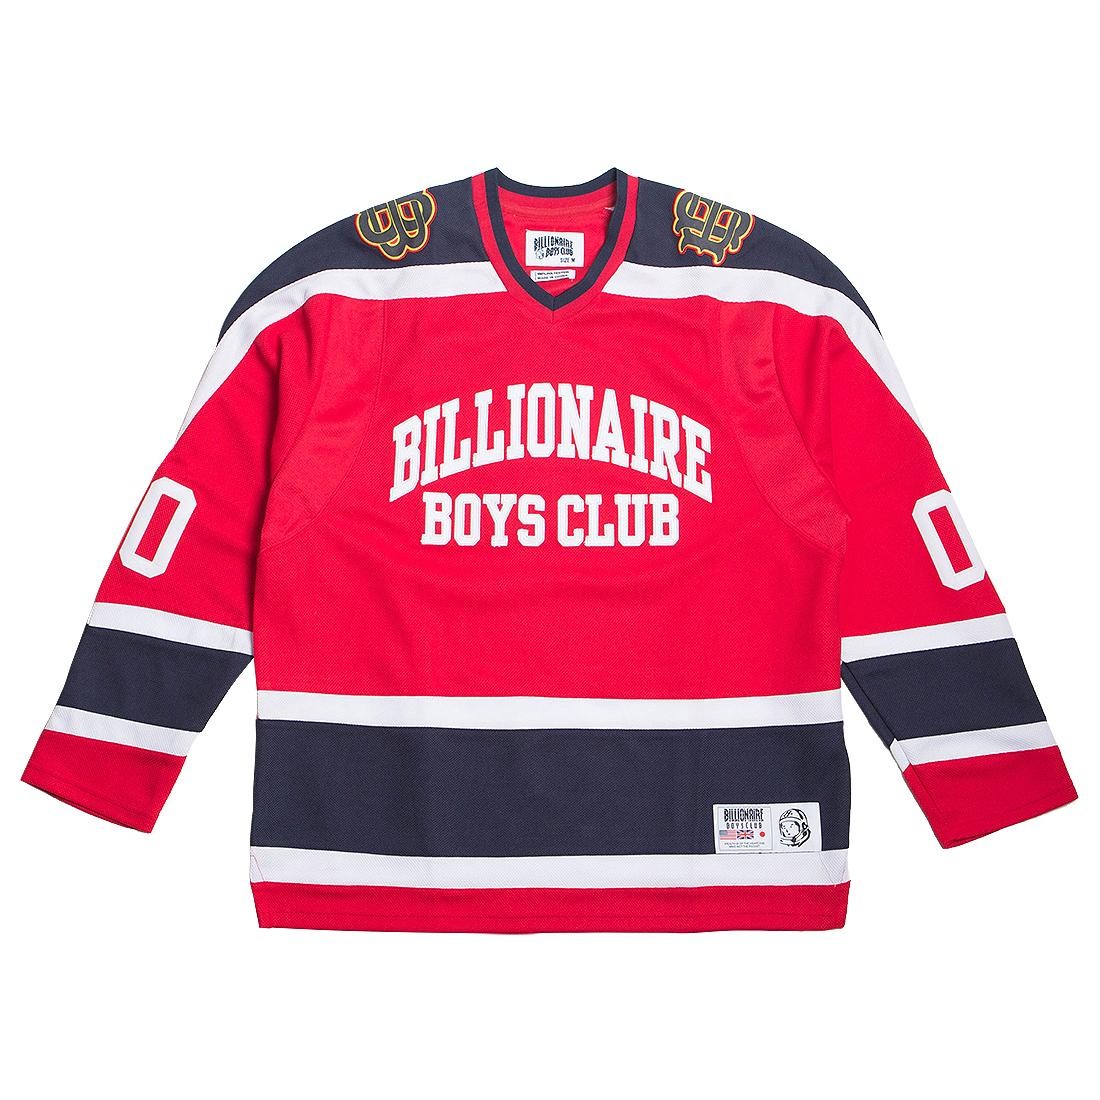 billionaire boys club jersey